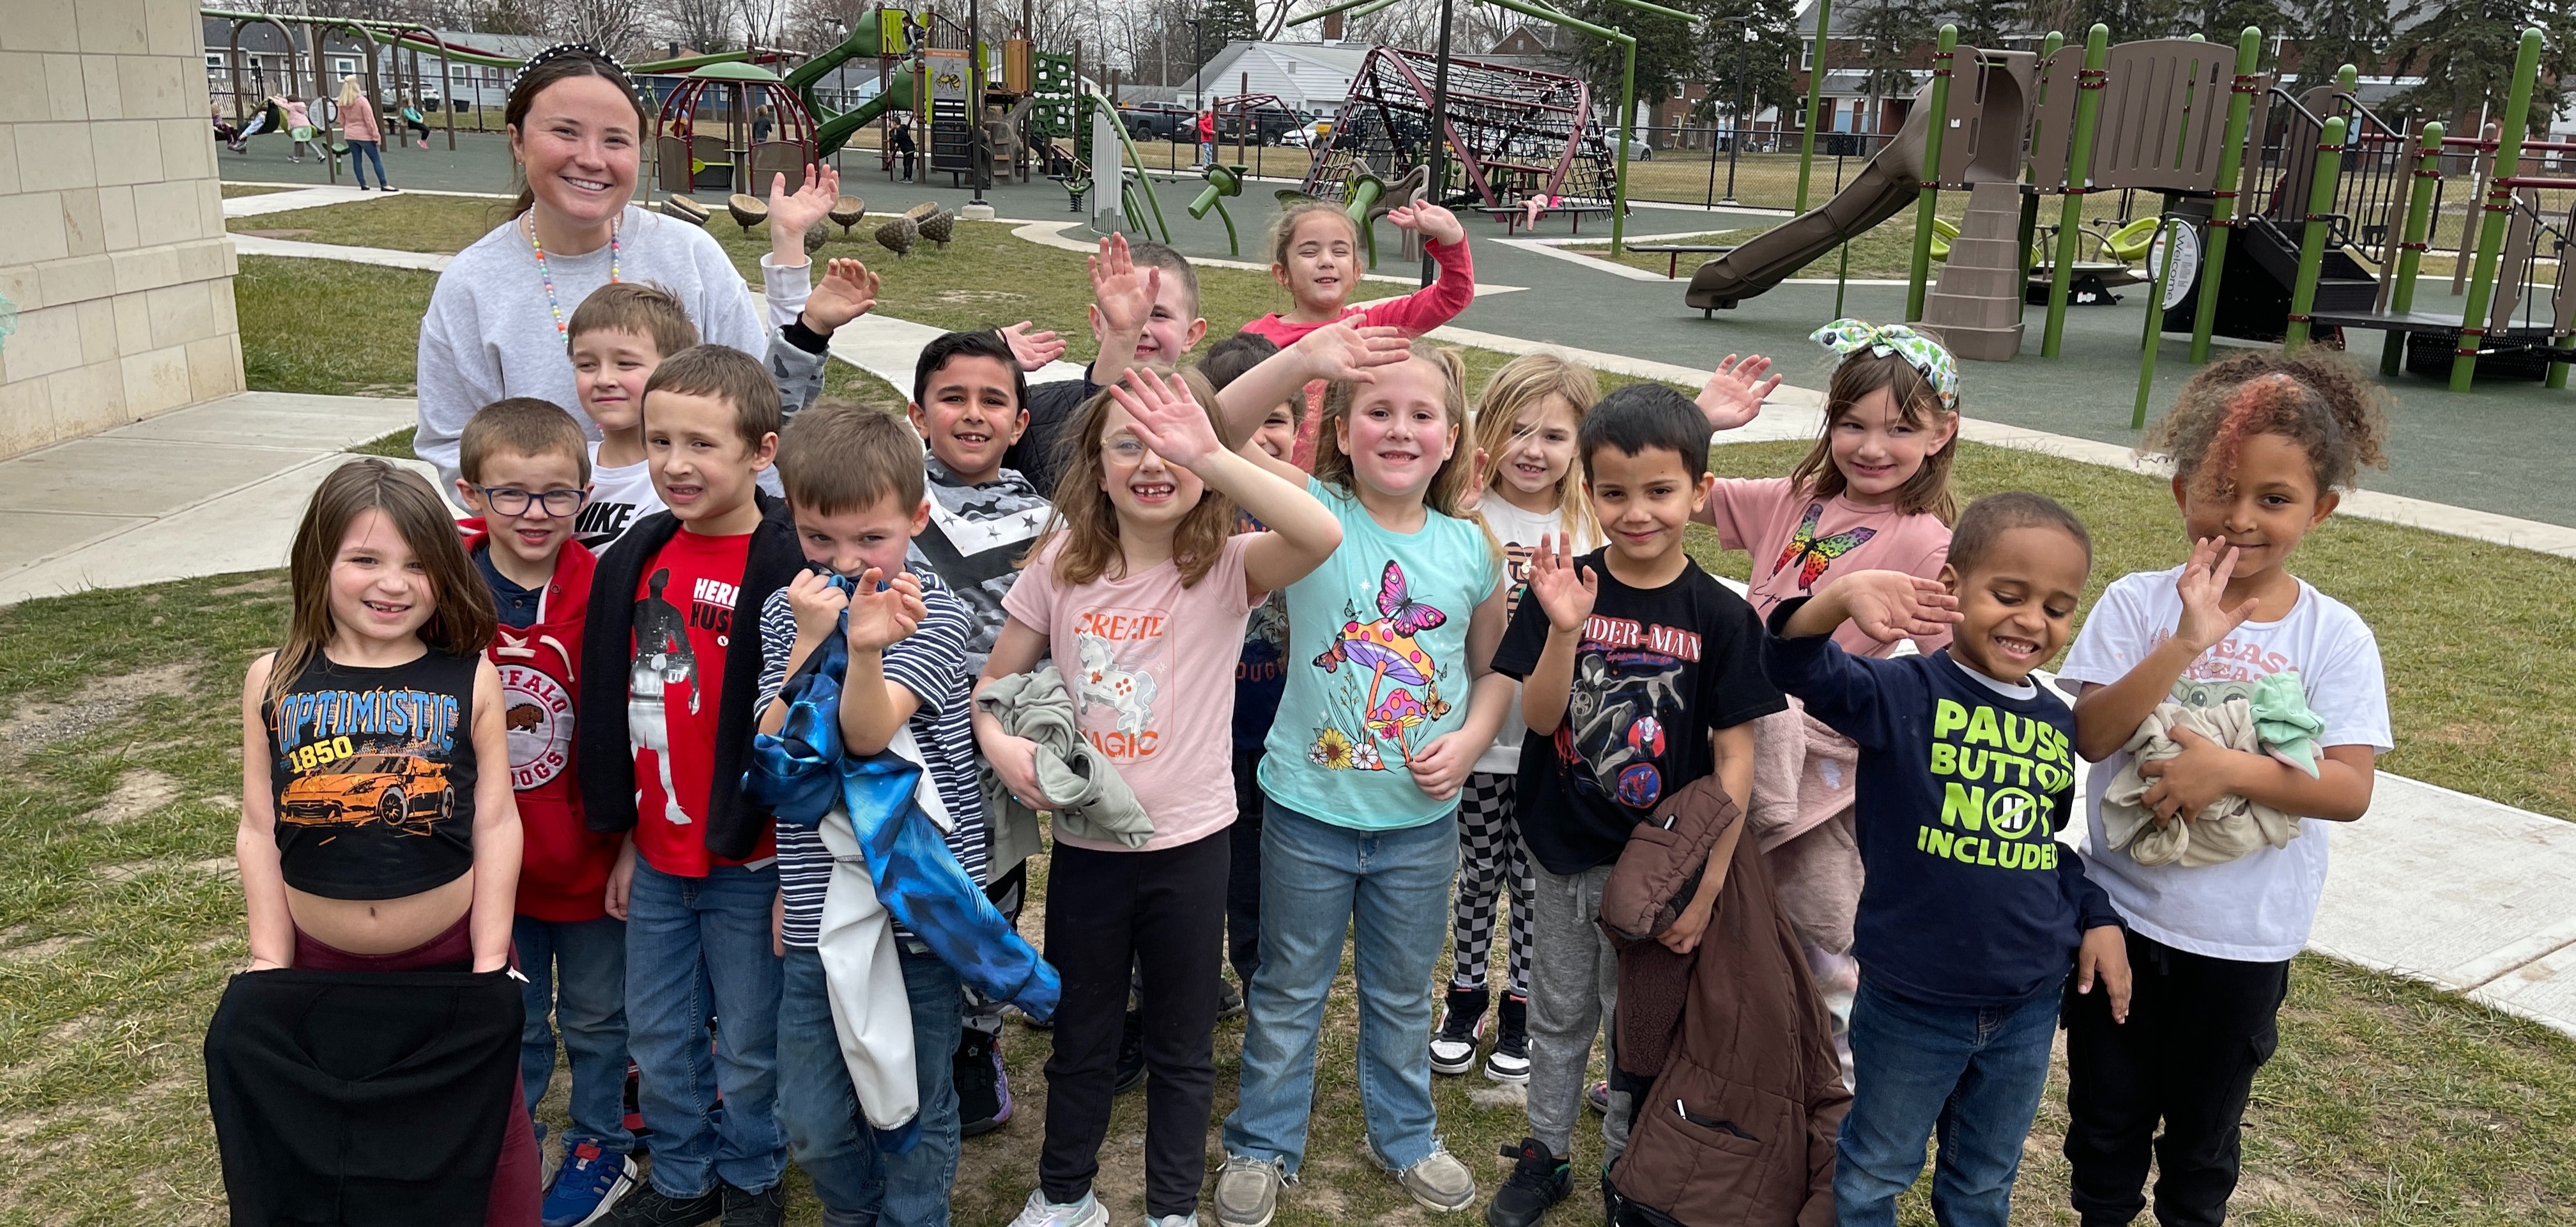 children smiling and waving on playground